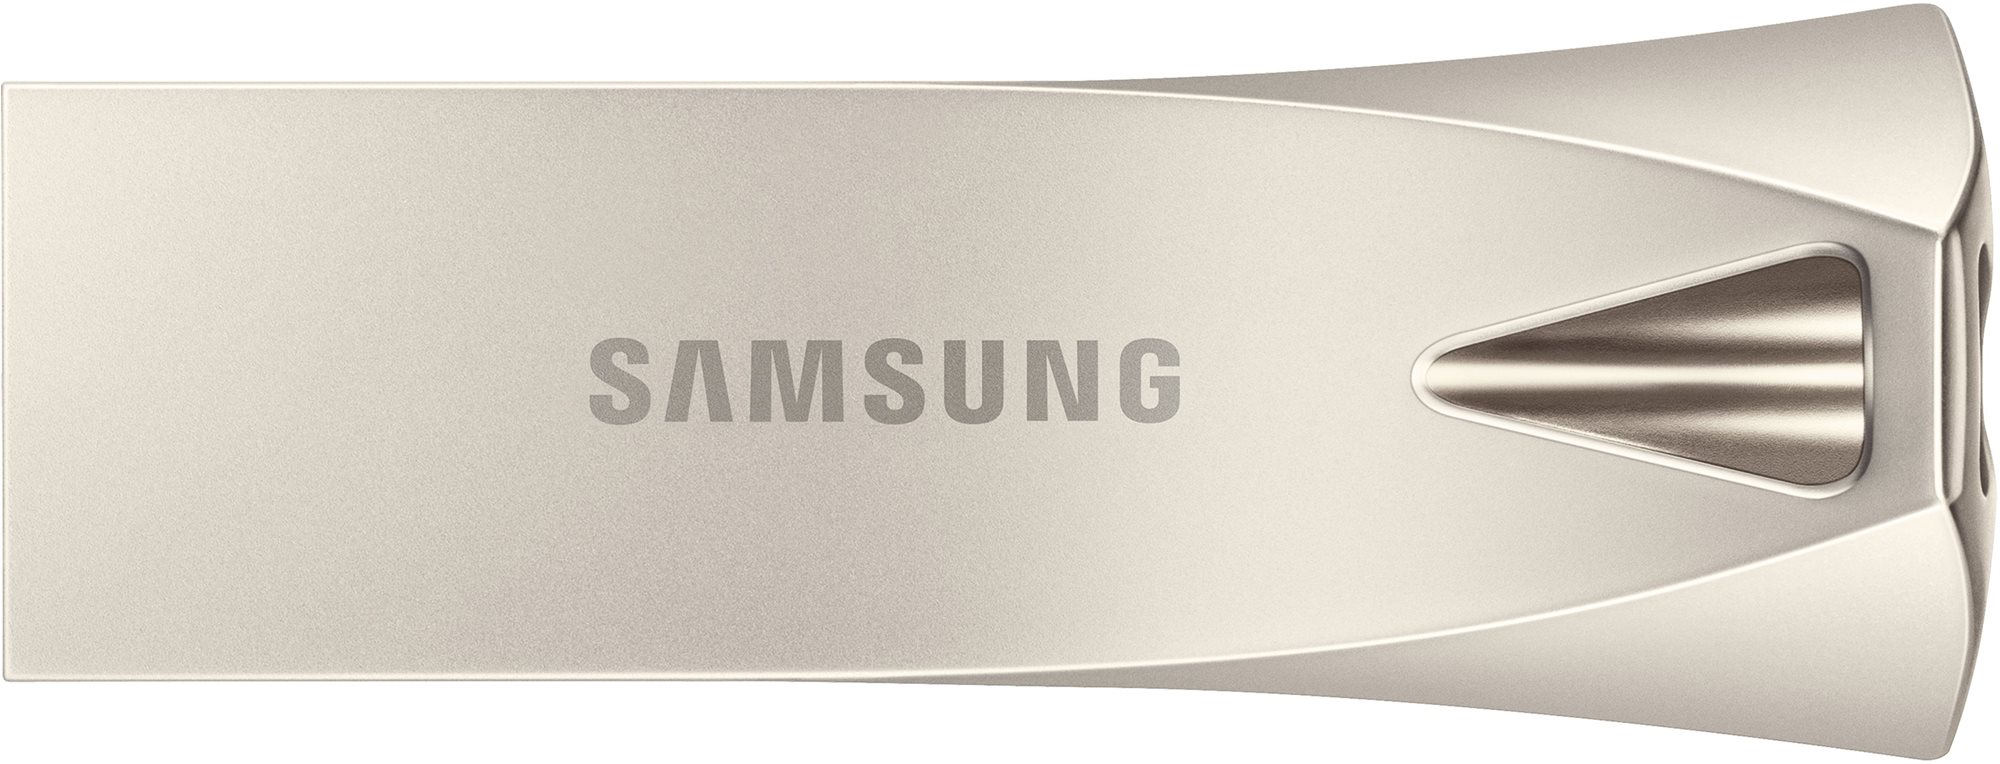 Pendrive Samsung USB 3.1 128GB Bar Plus Champagne Silver